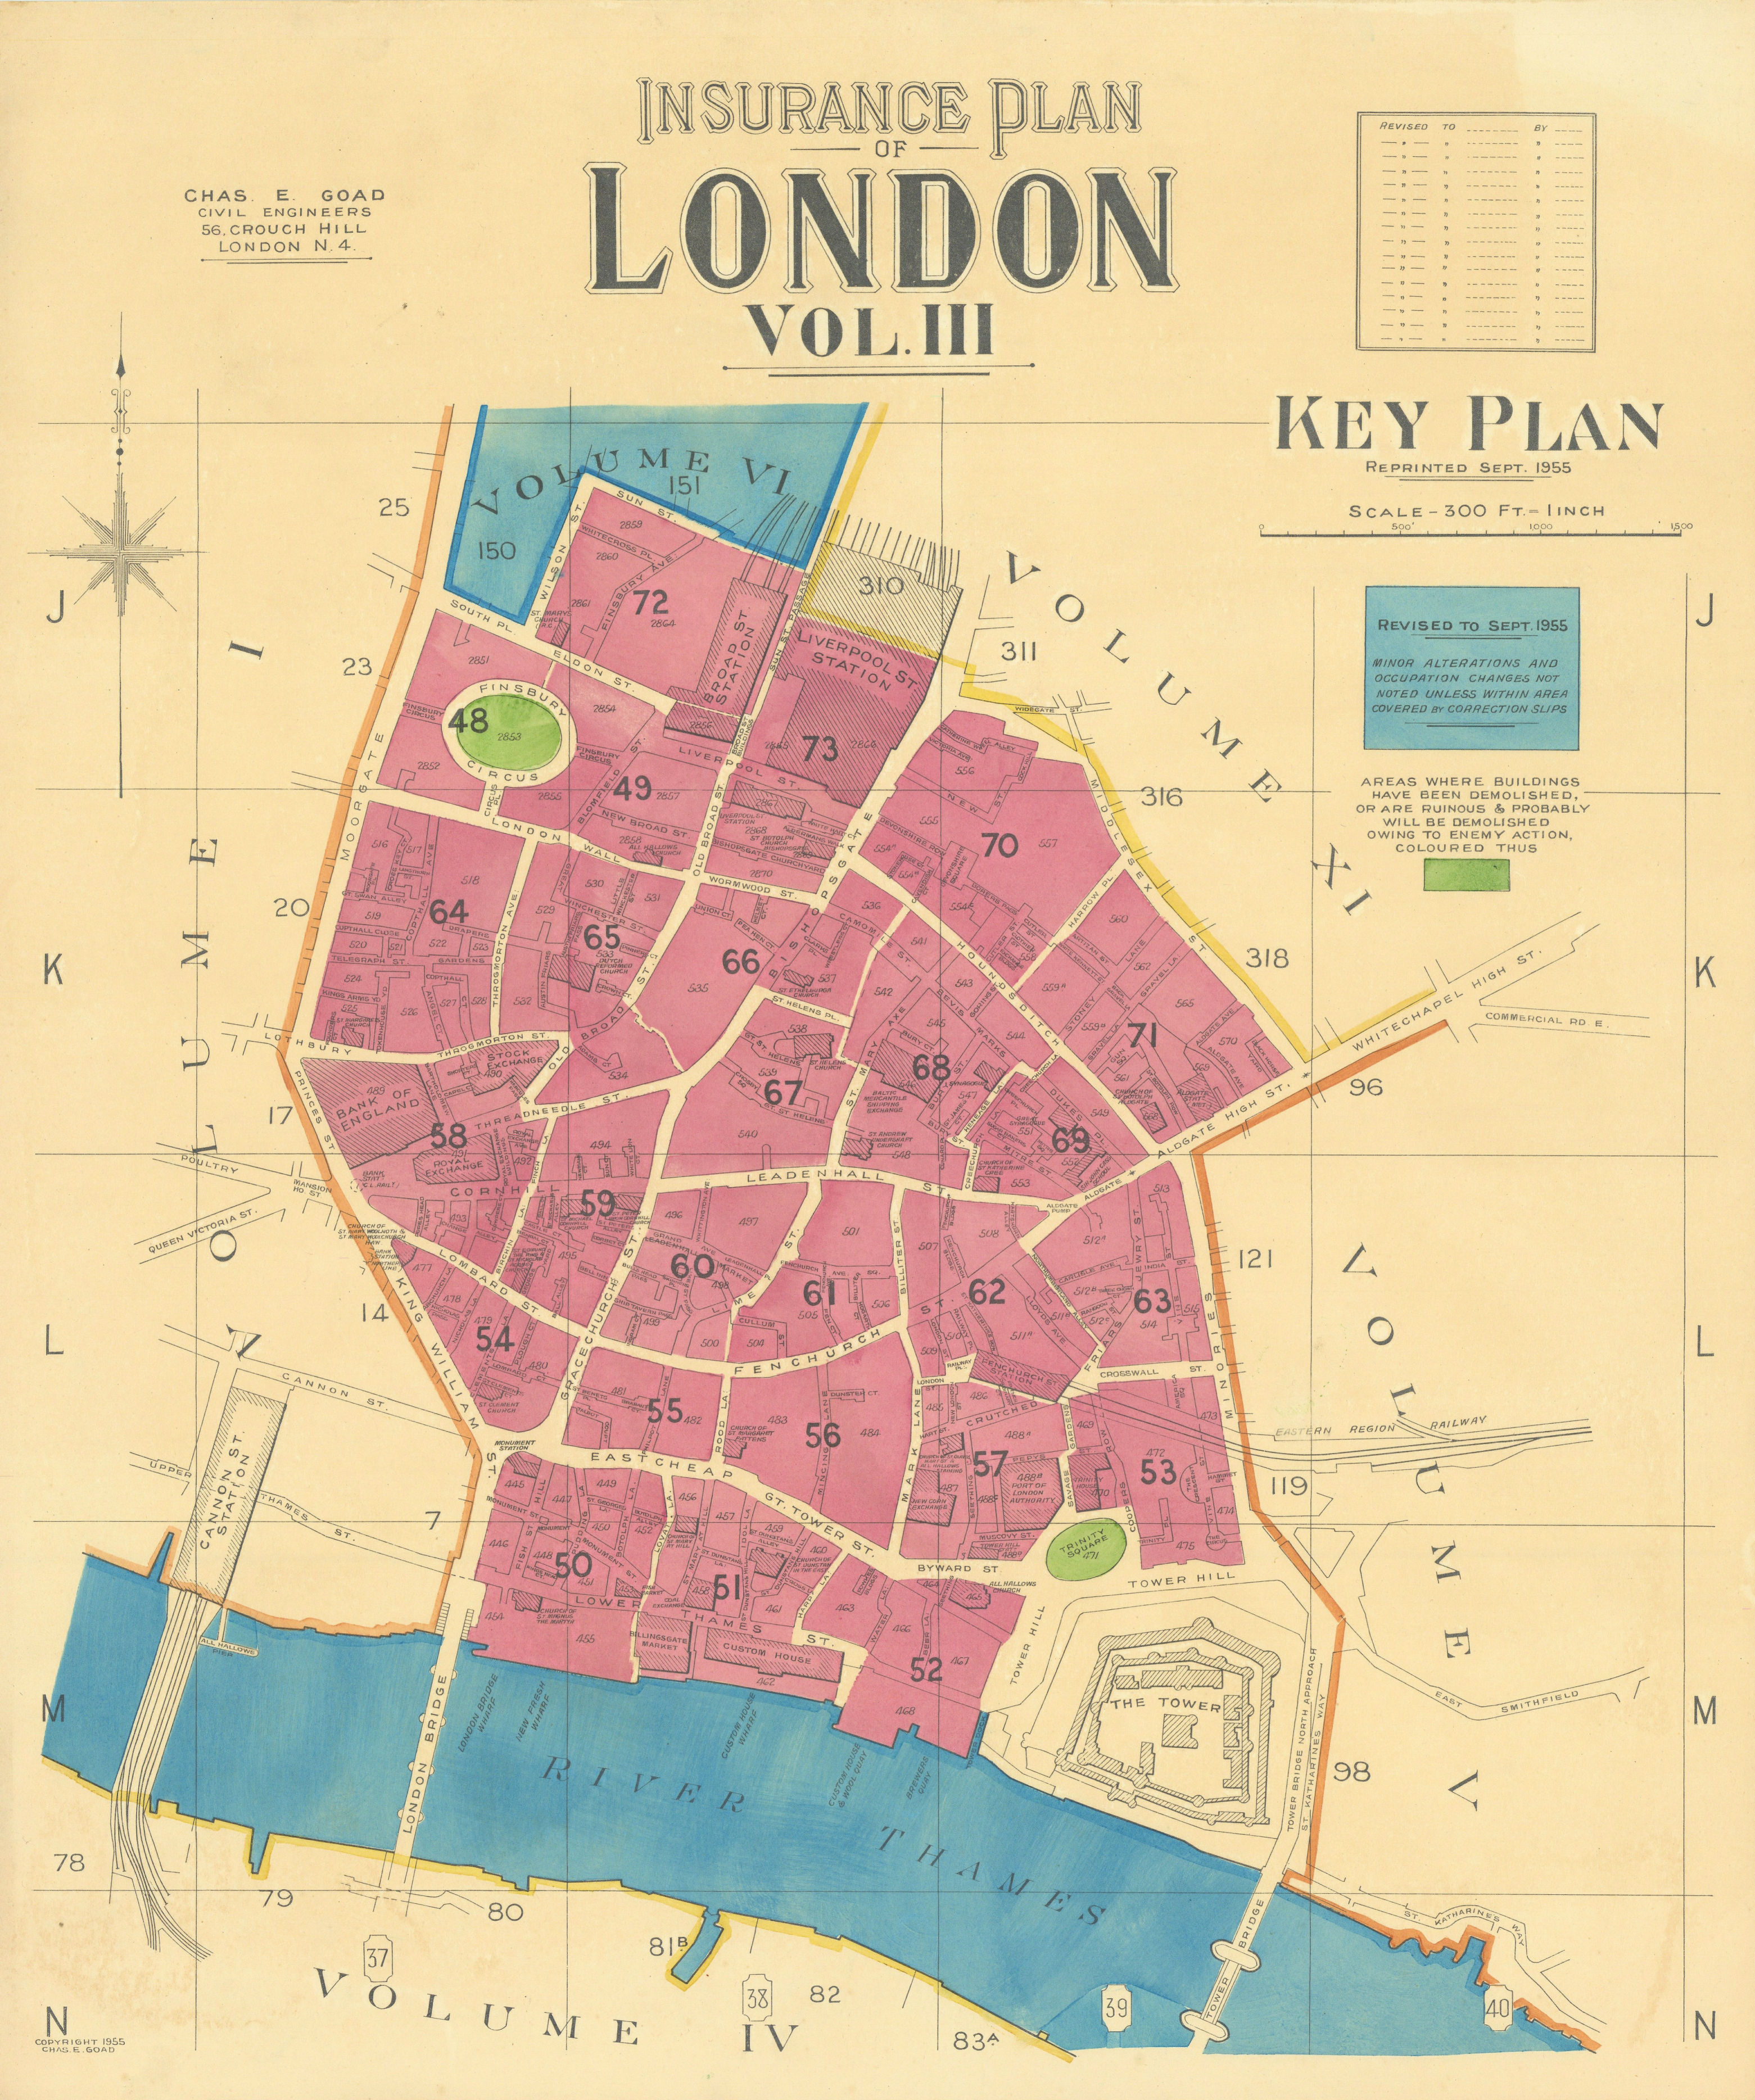 Associate Product Charles Goad London Vol III Insurance keyplan. City of London 1955 old map